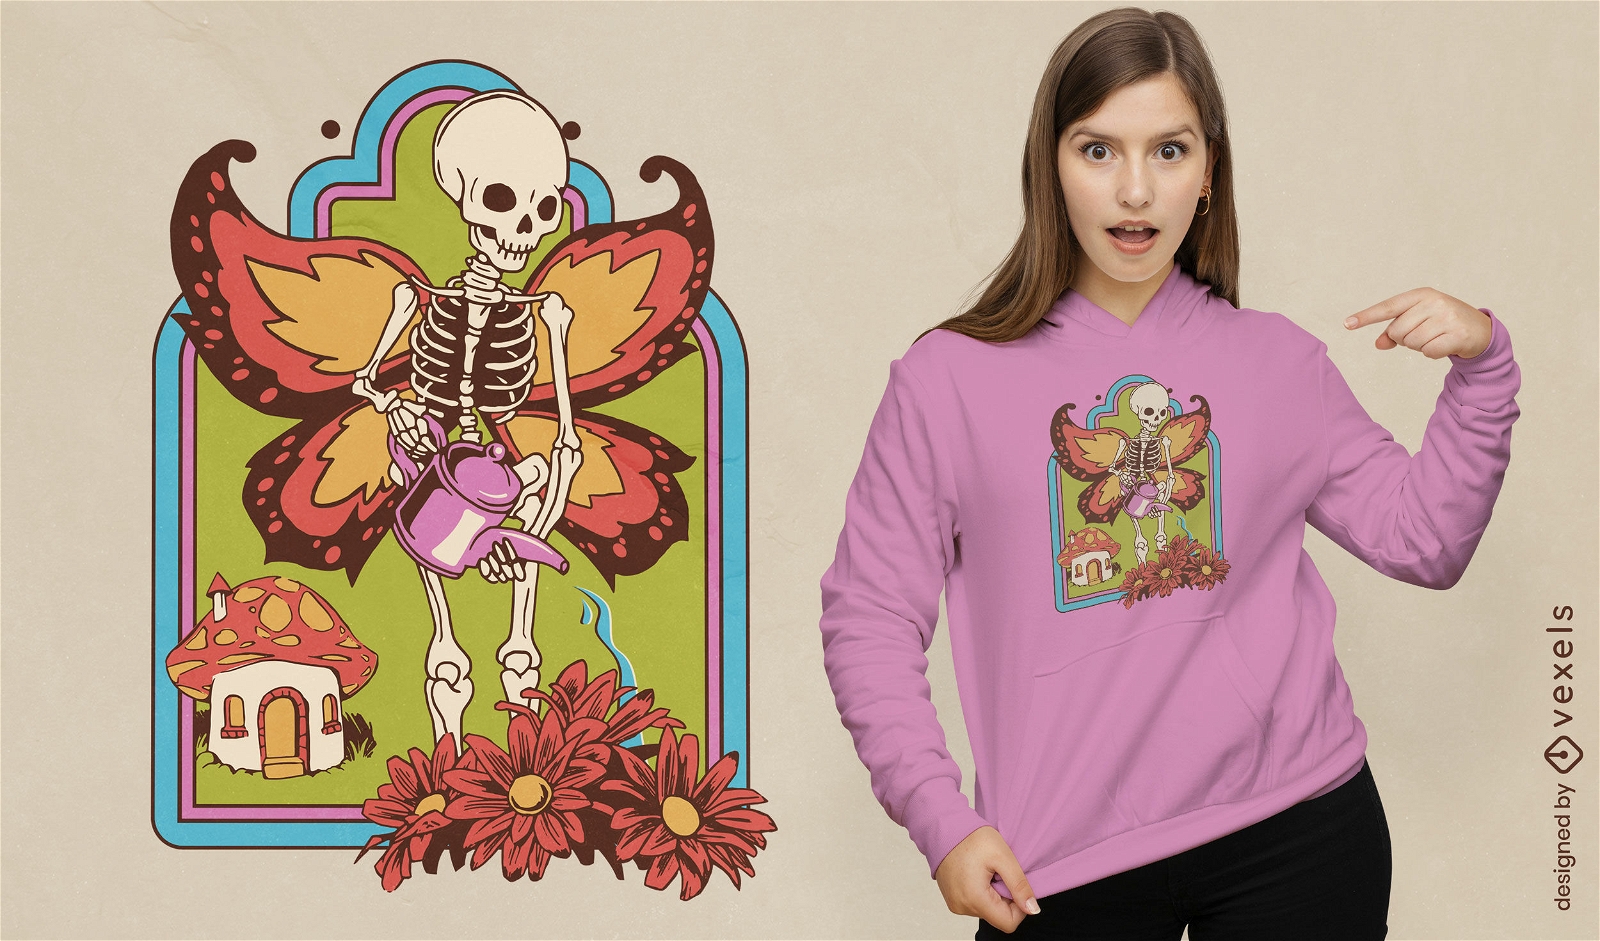 Skeleton and flowers t-shirt design